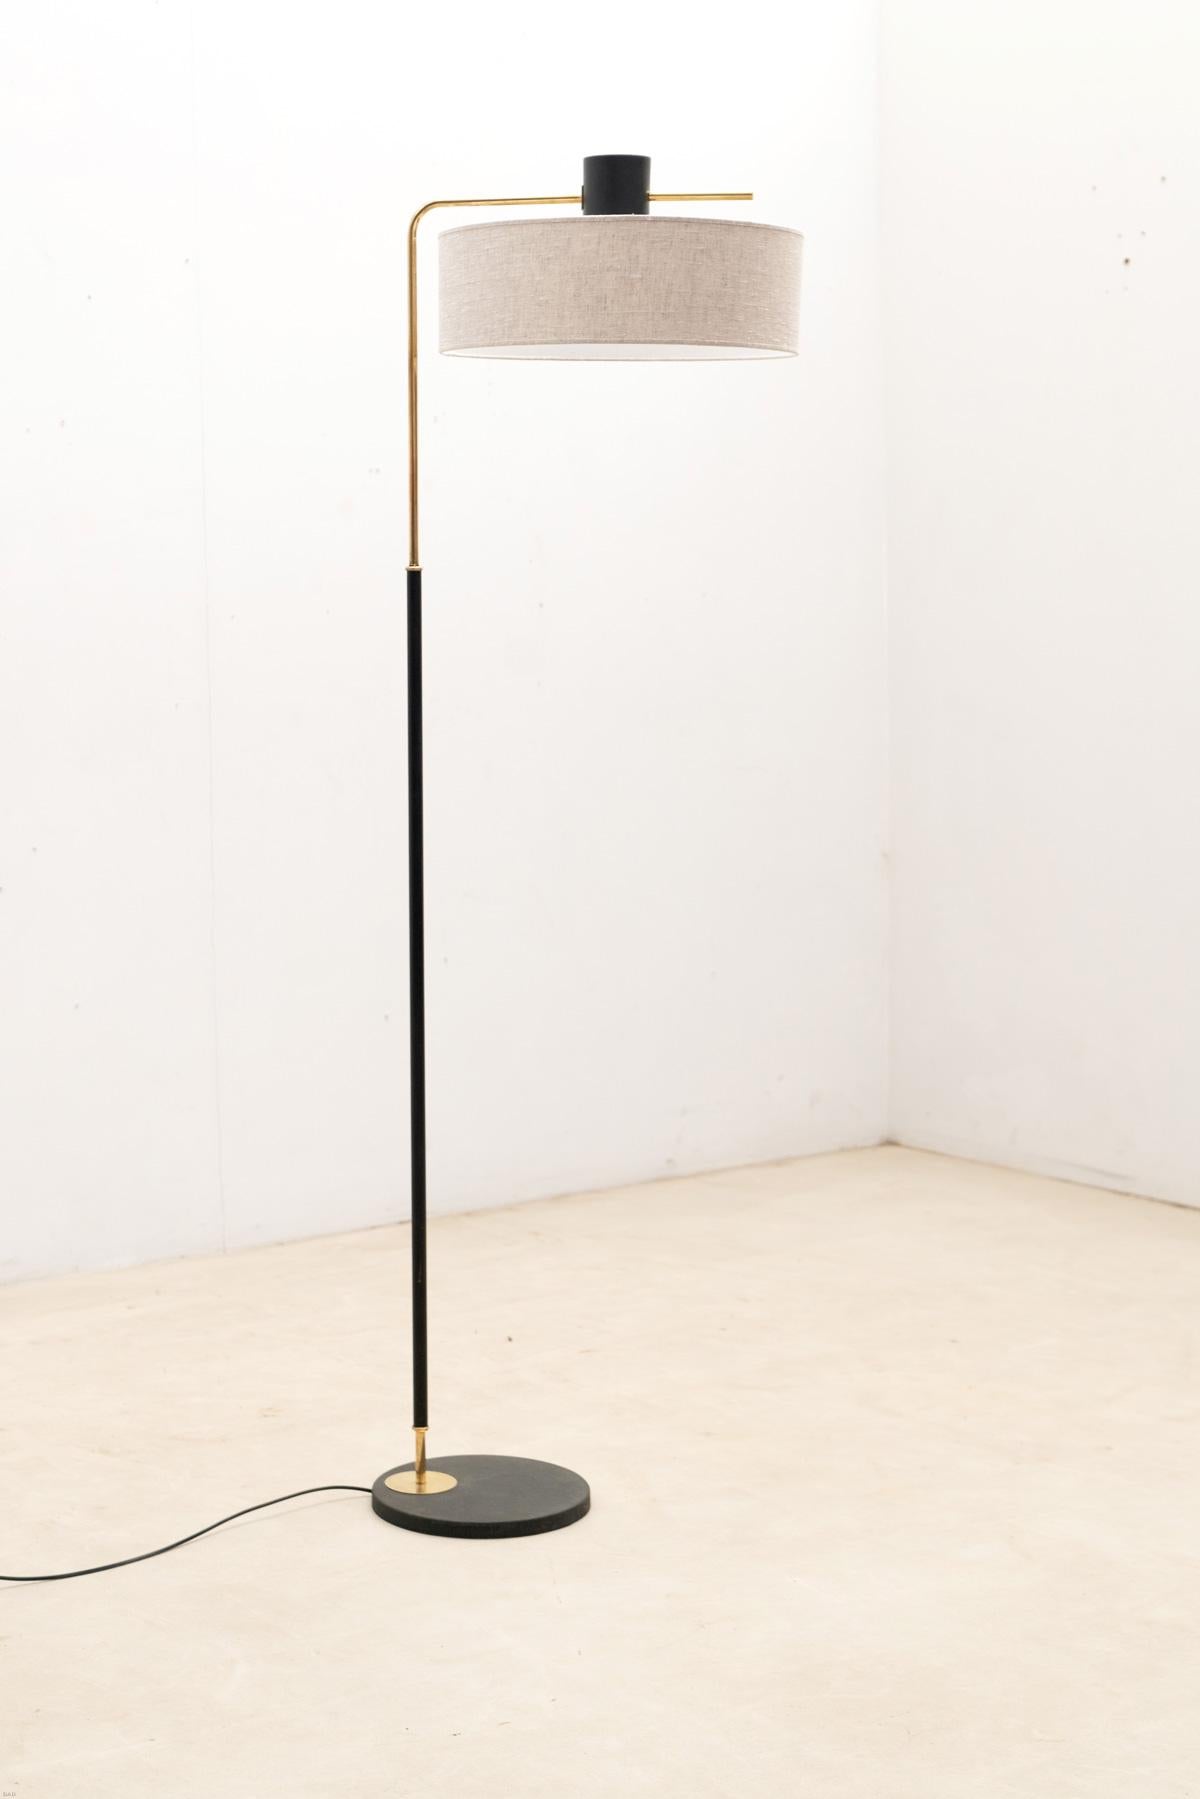 Lunel floor lamp, France 1950s For Sale 3